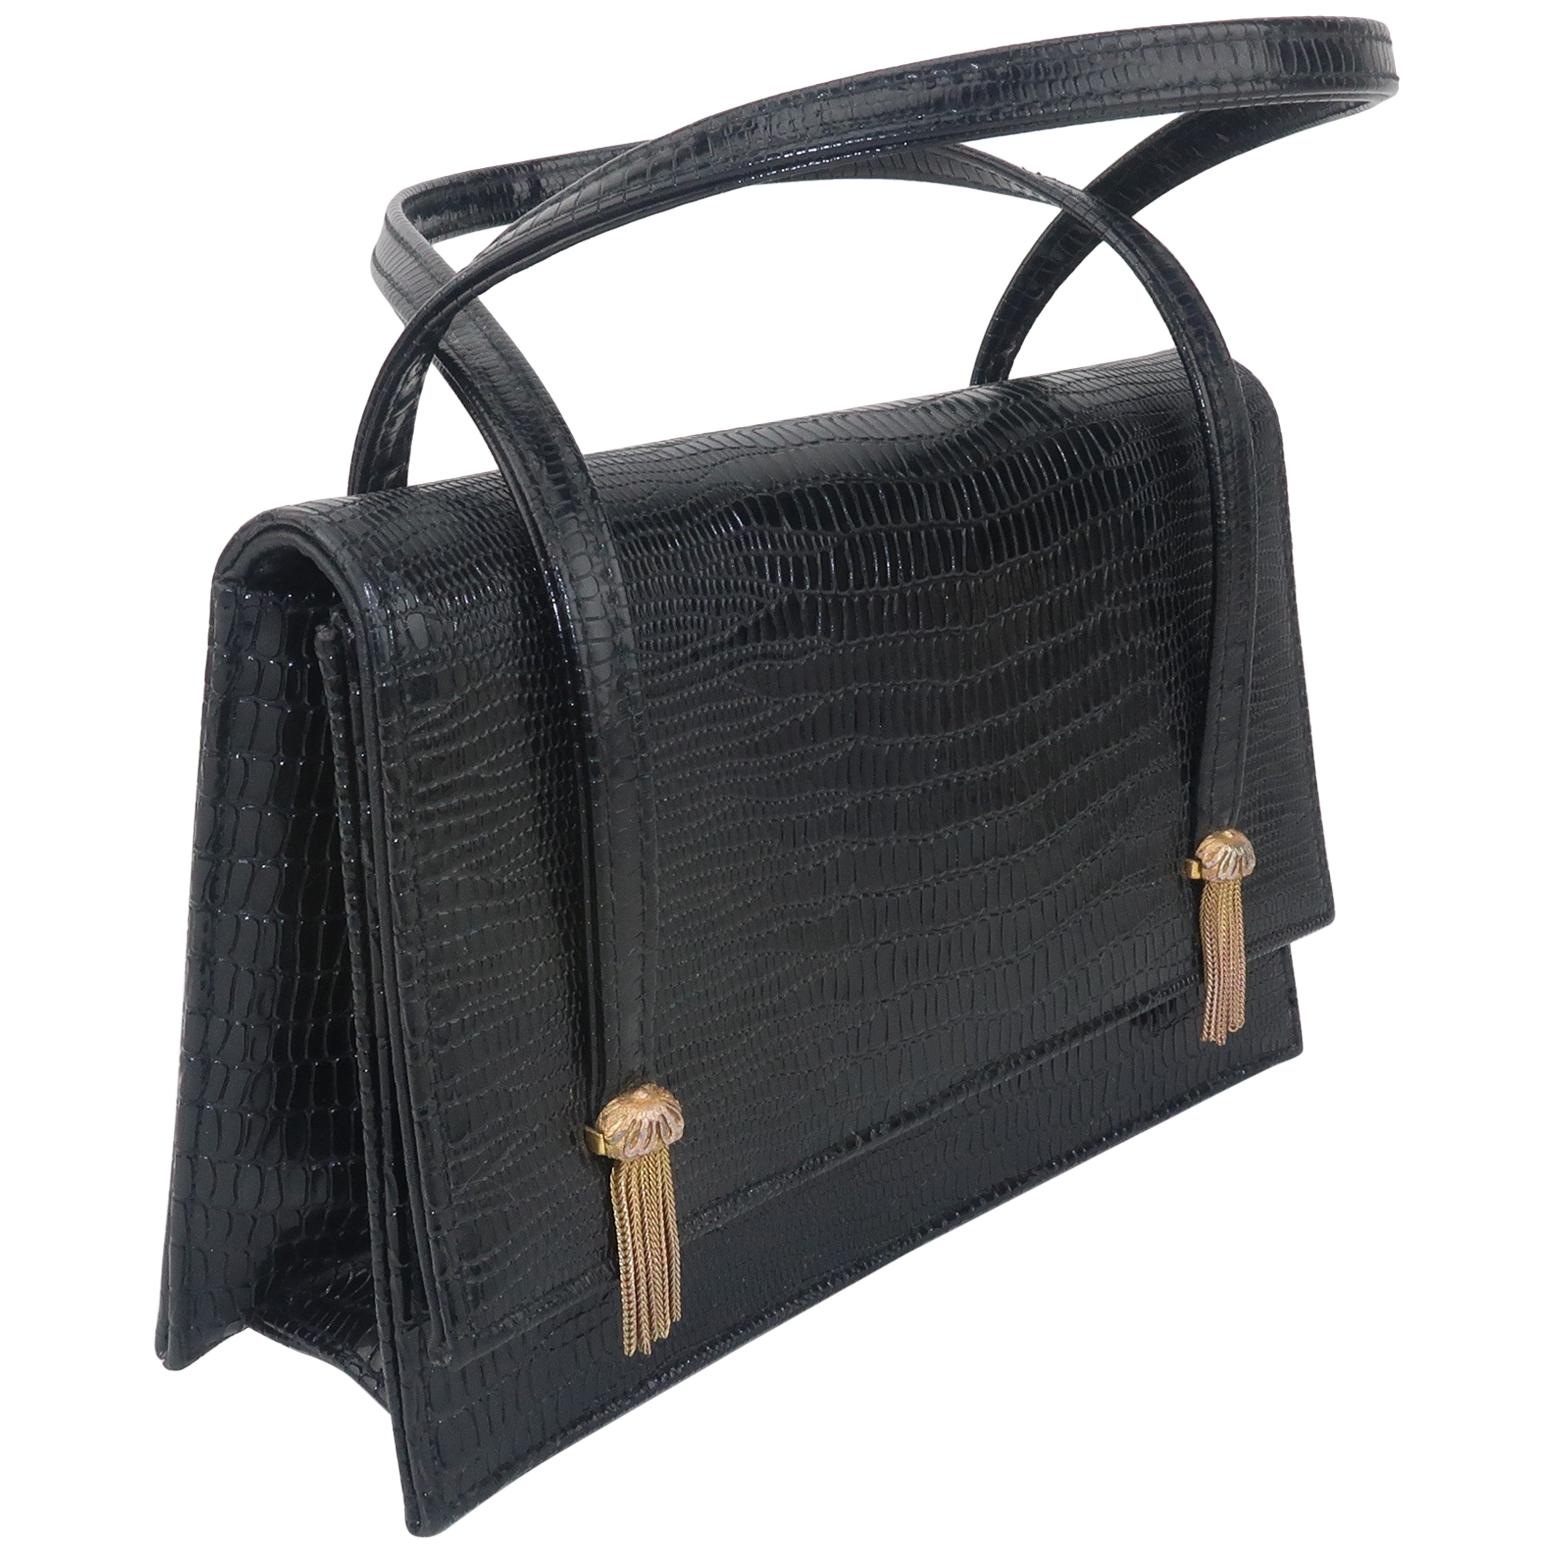 Meyers Black Lizard Embossed Leather Handbag With Chain Tassels, C.1960